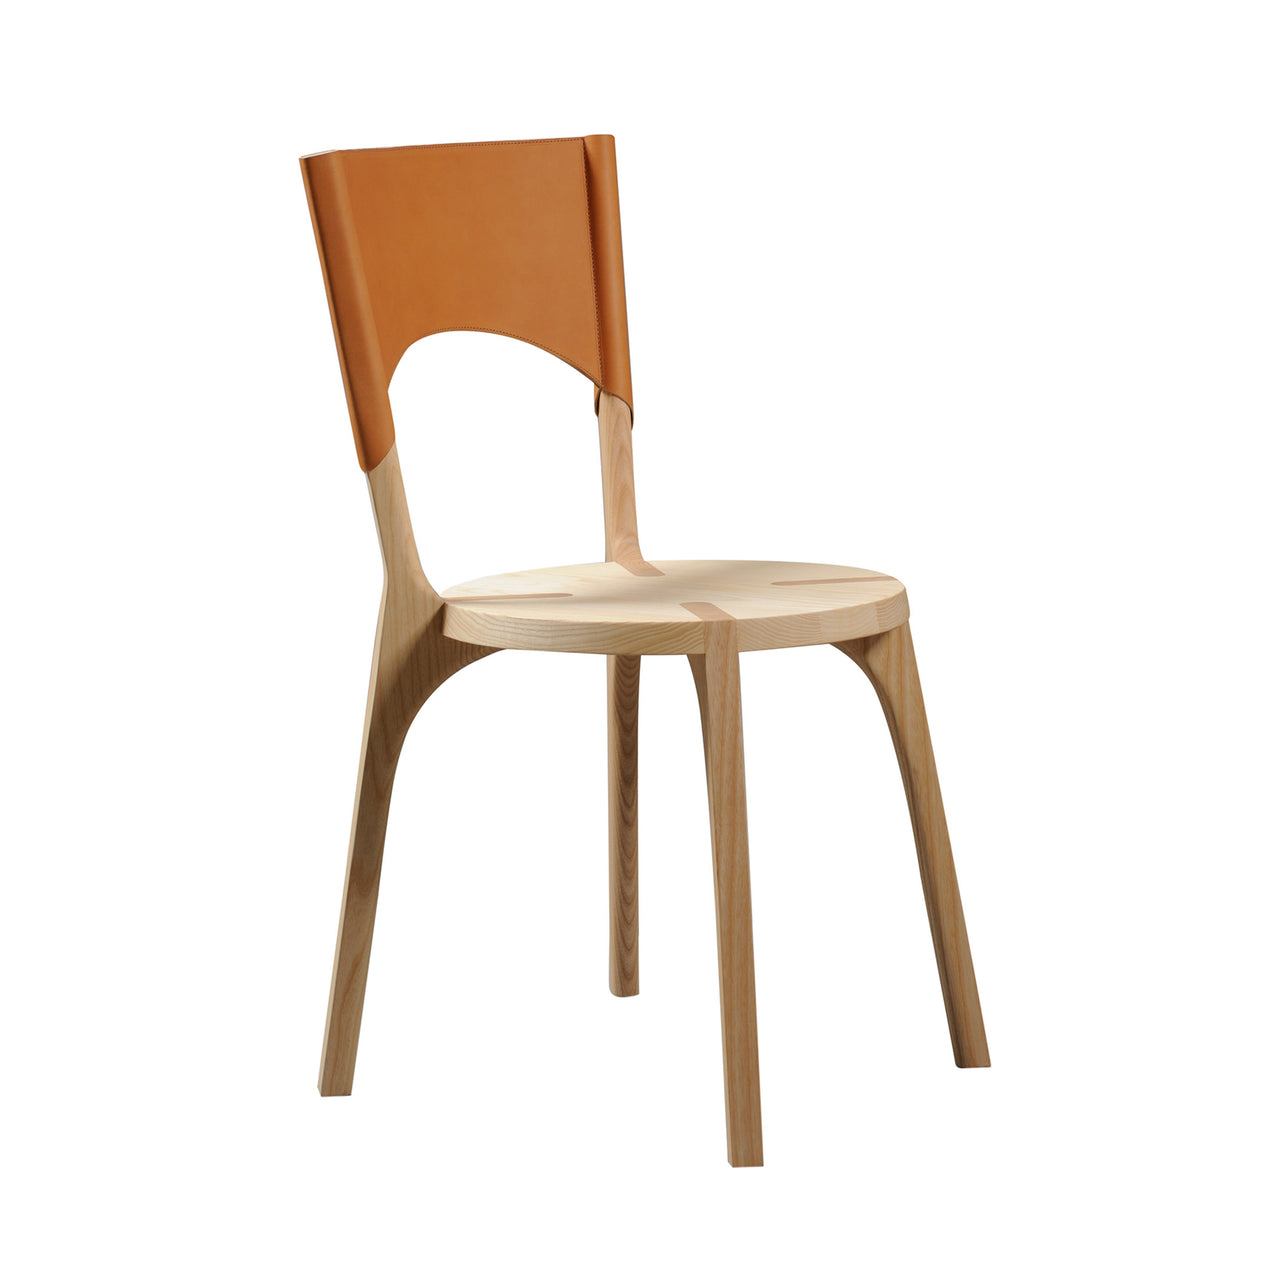 Café Tattoo Chair: Plain + Without Cushion + Cognac Saddle Leather + White Oiled Ash